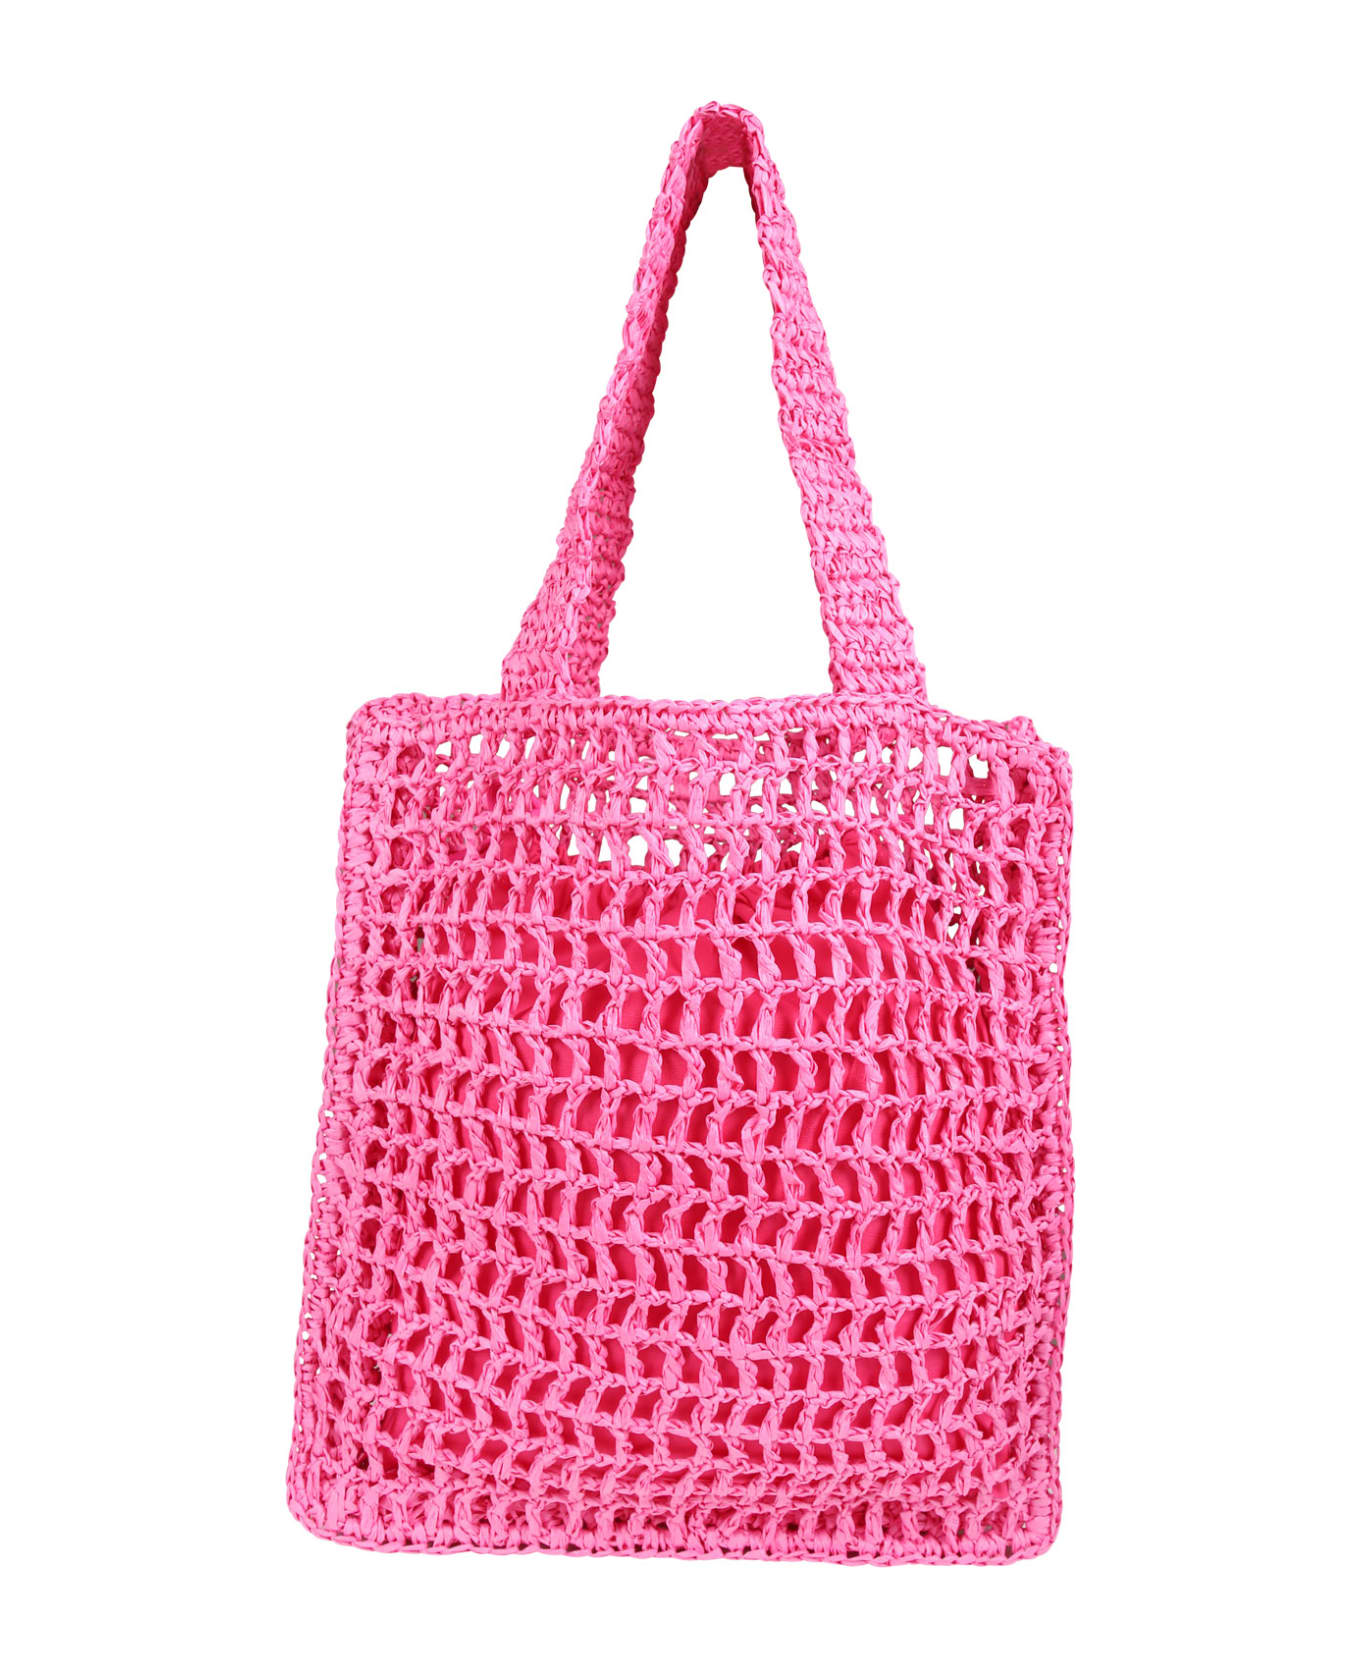 MSGM Fuchsia Bag For Girl With Logo - Fuchsia